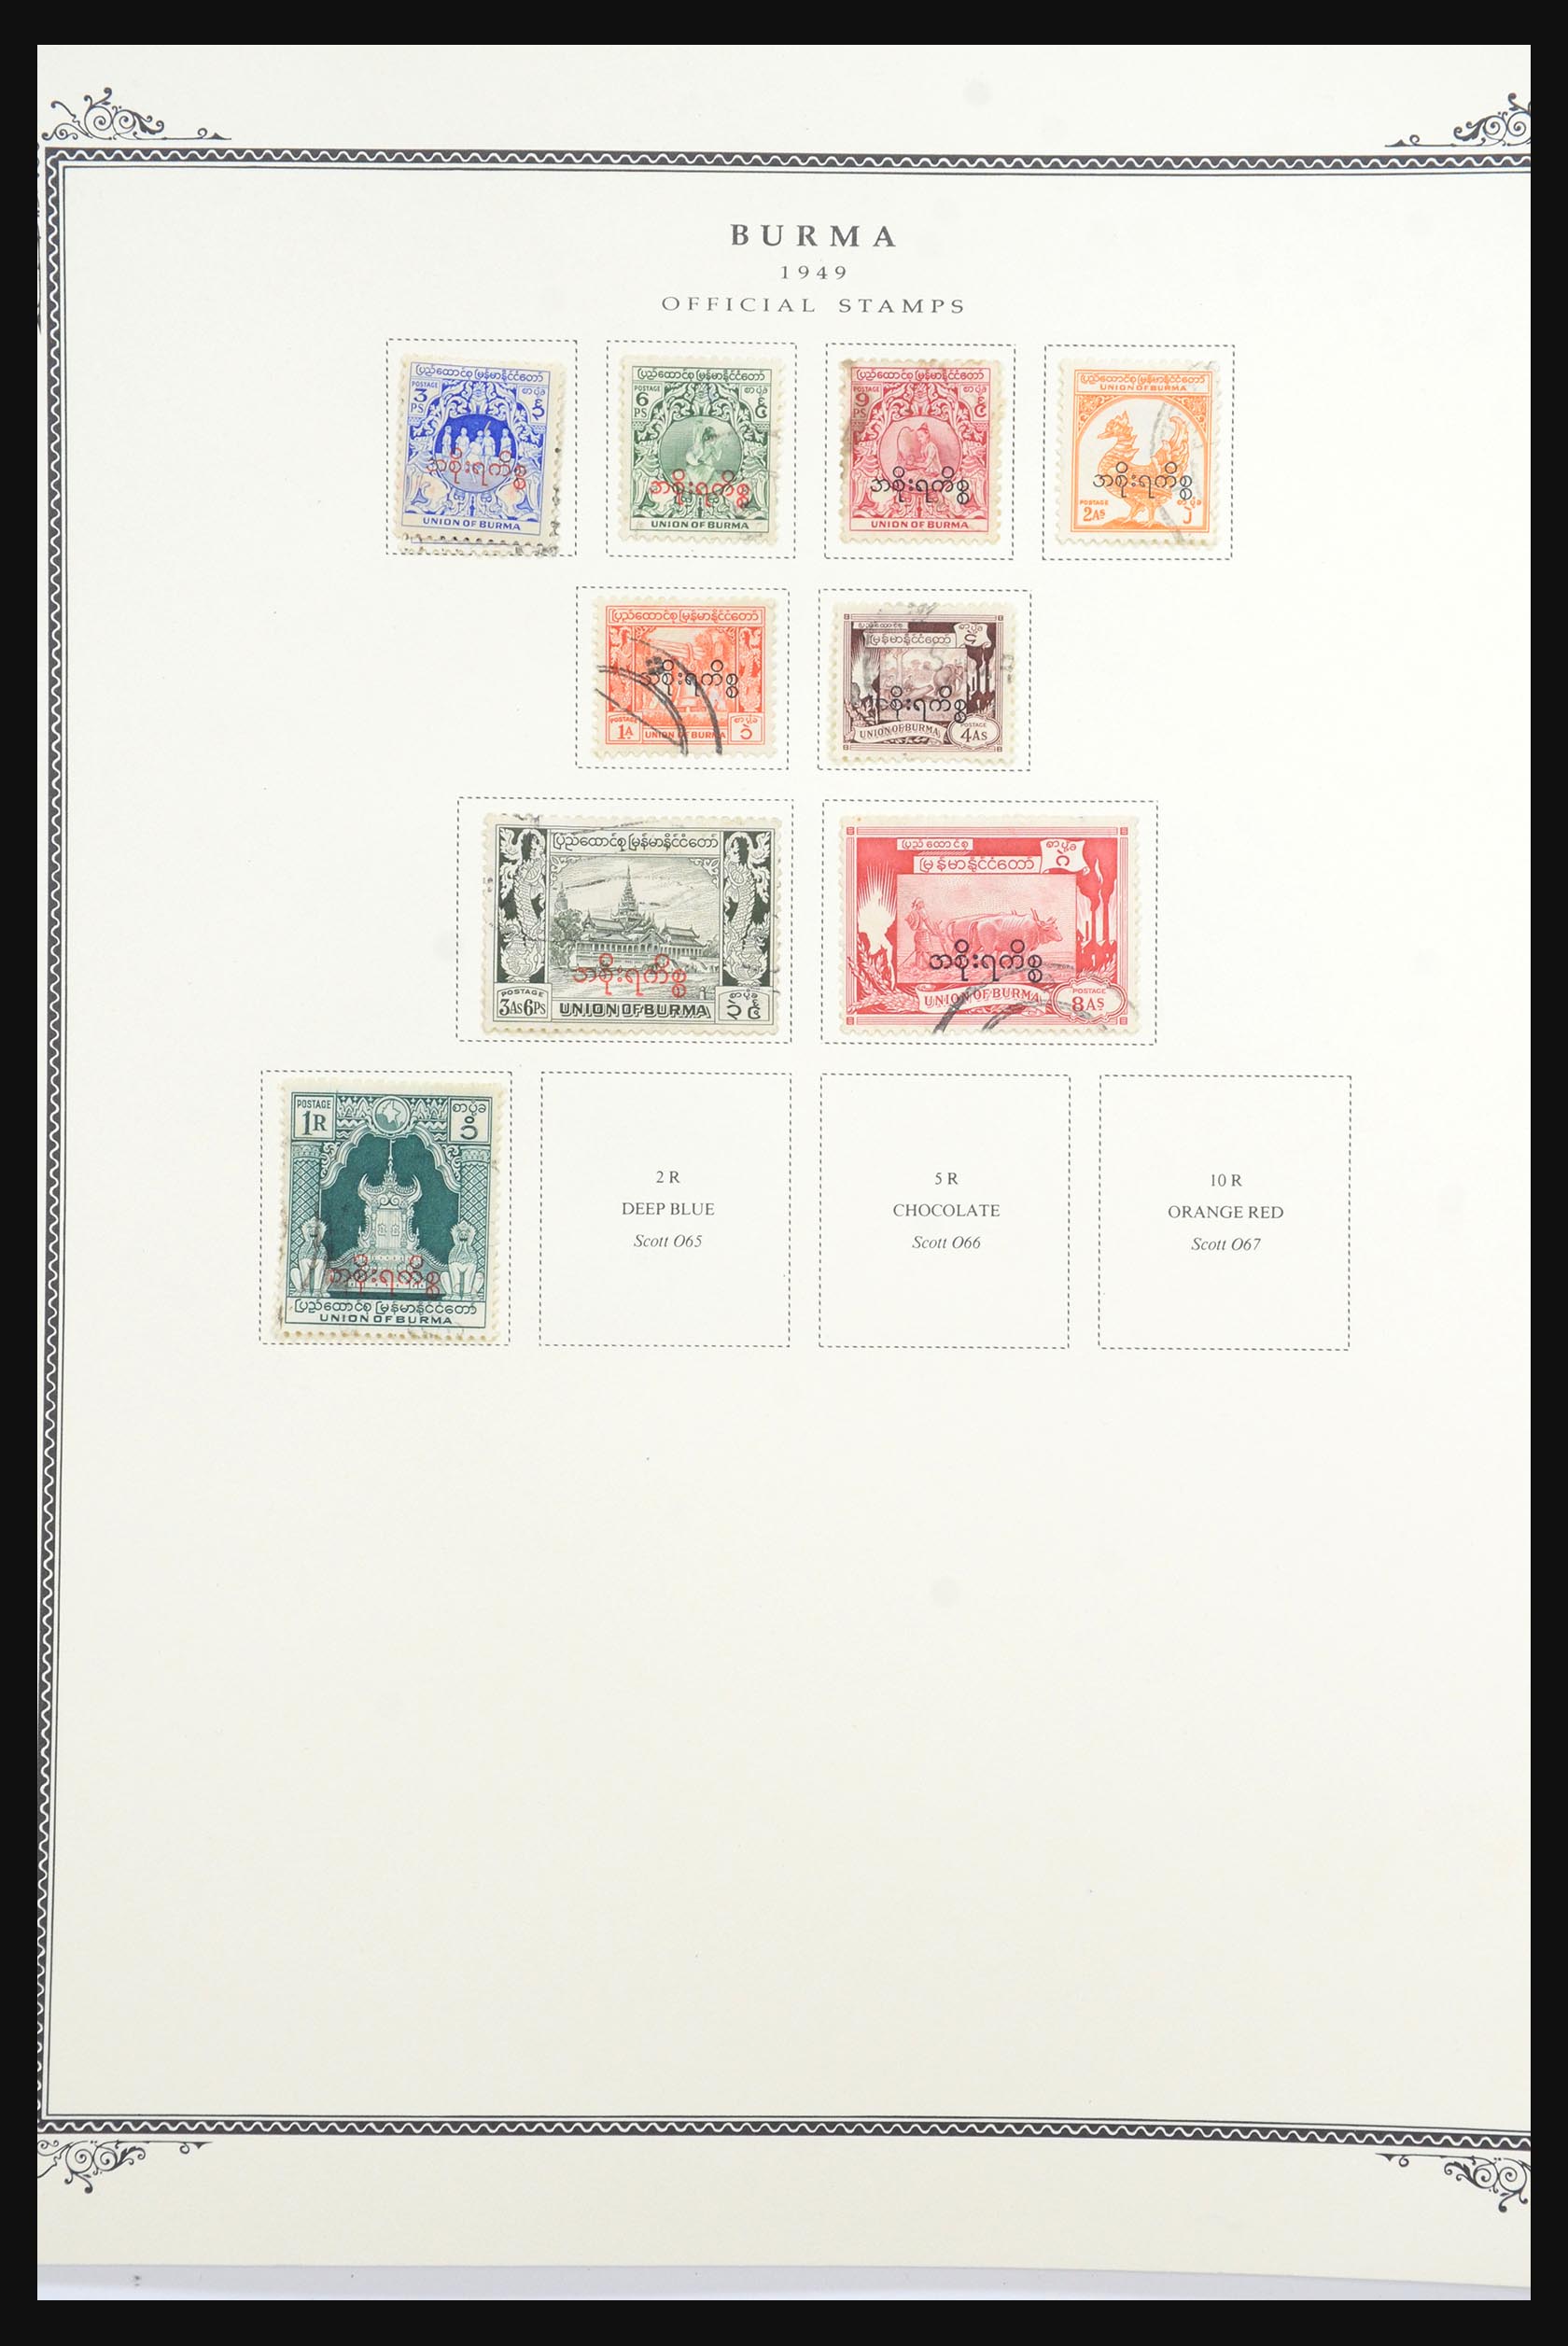 31553 027 - 31553 Burma and Ceylon 1857-1991.